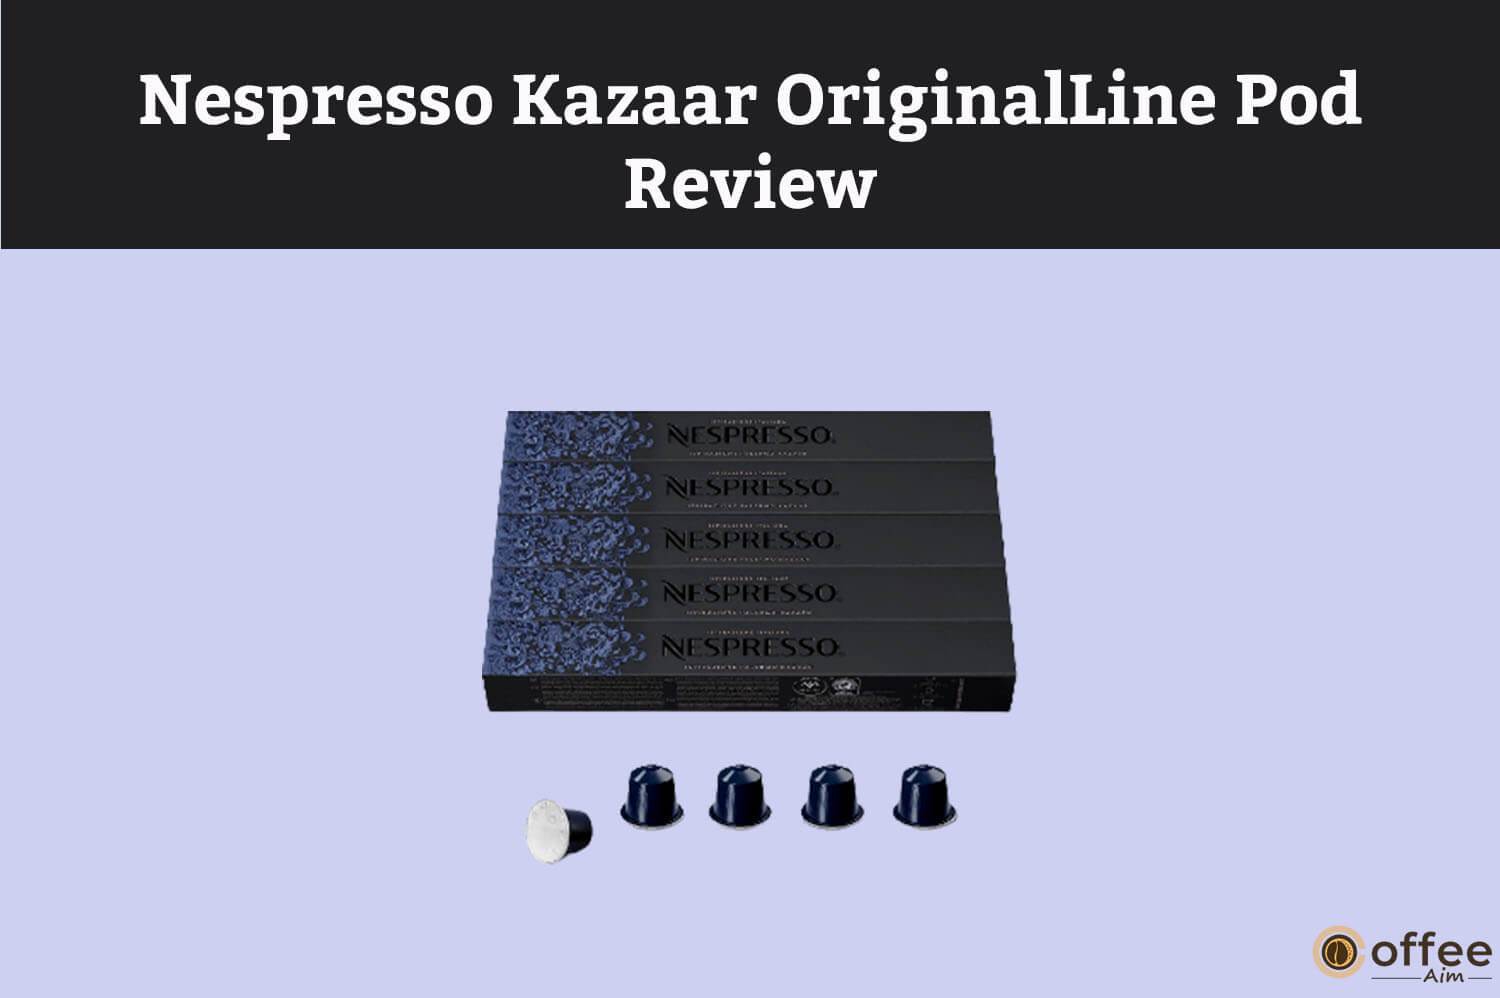 Featured image for the article"Nespresso Kazaar OriginalLine Pod Review"